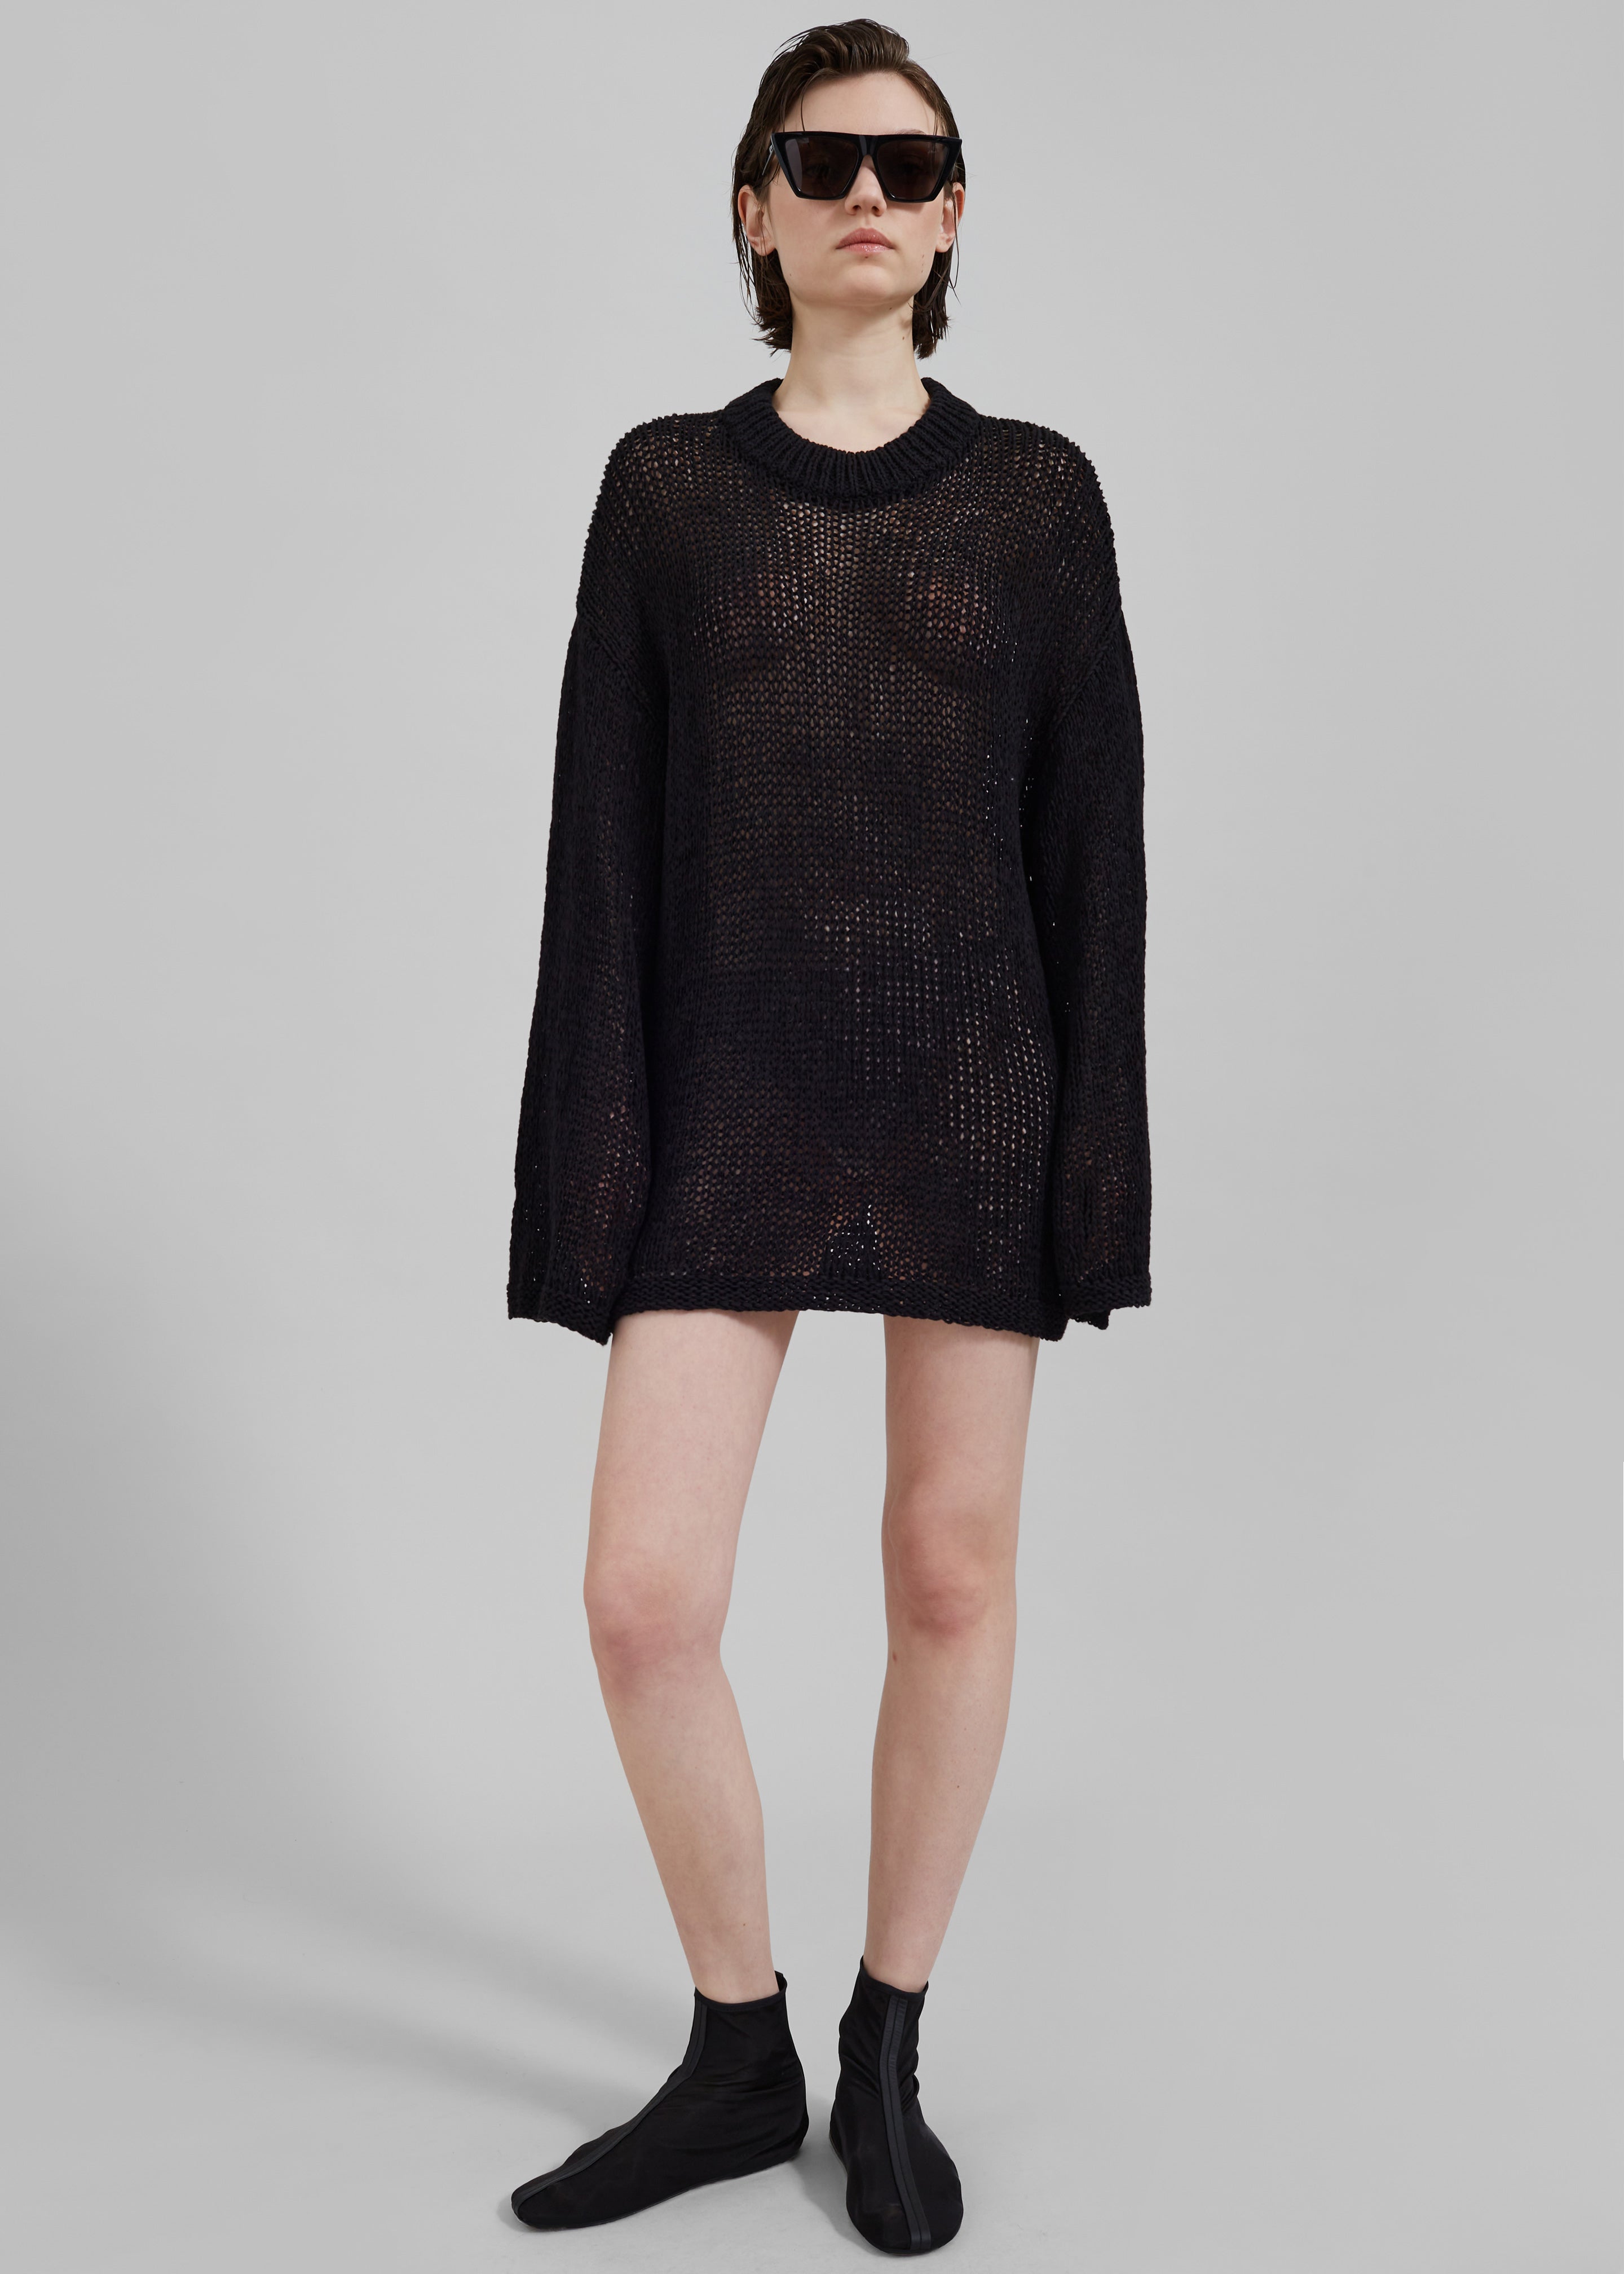 The Garment Literno Sweater - Black - 3